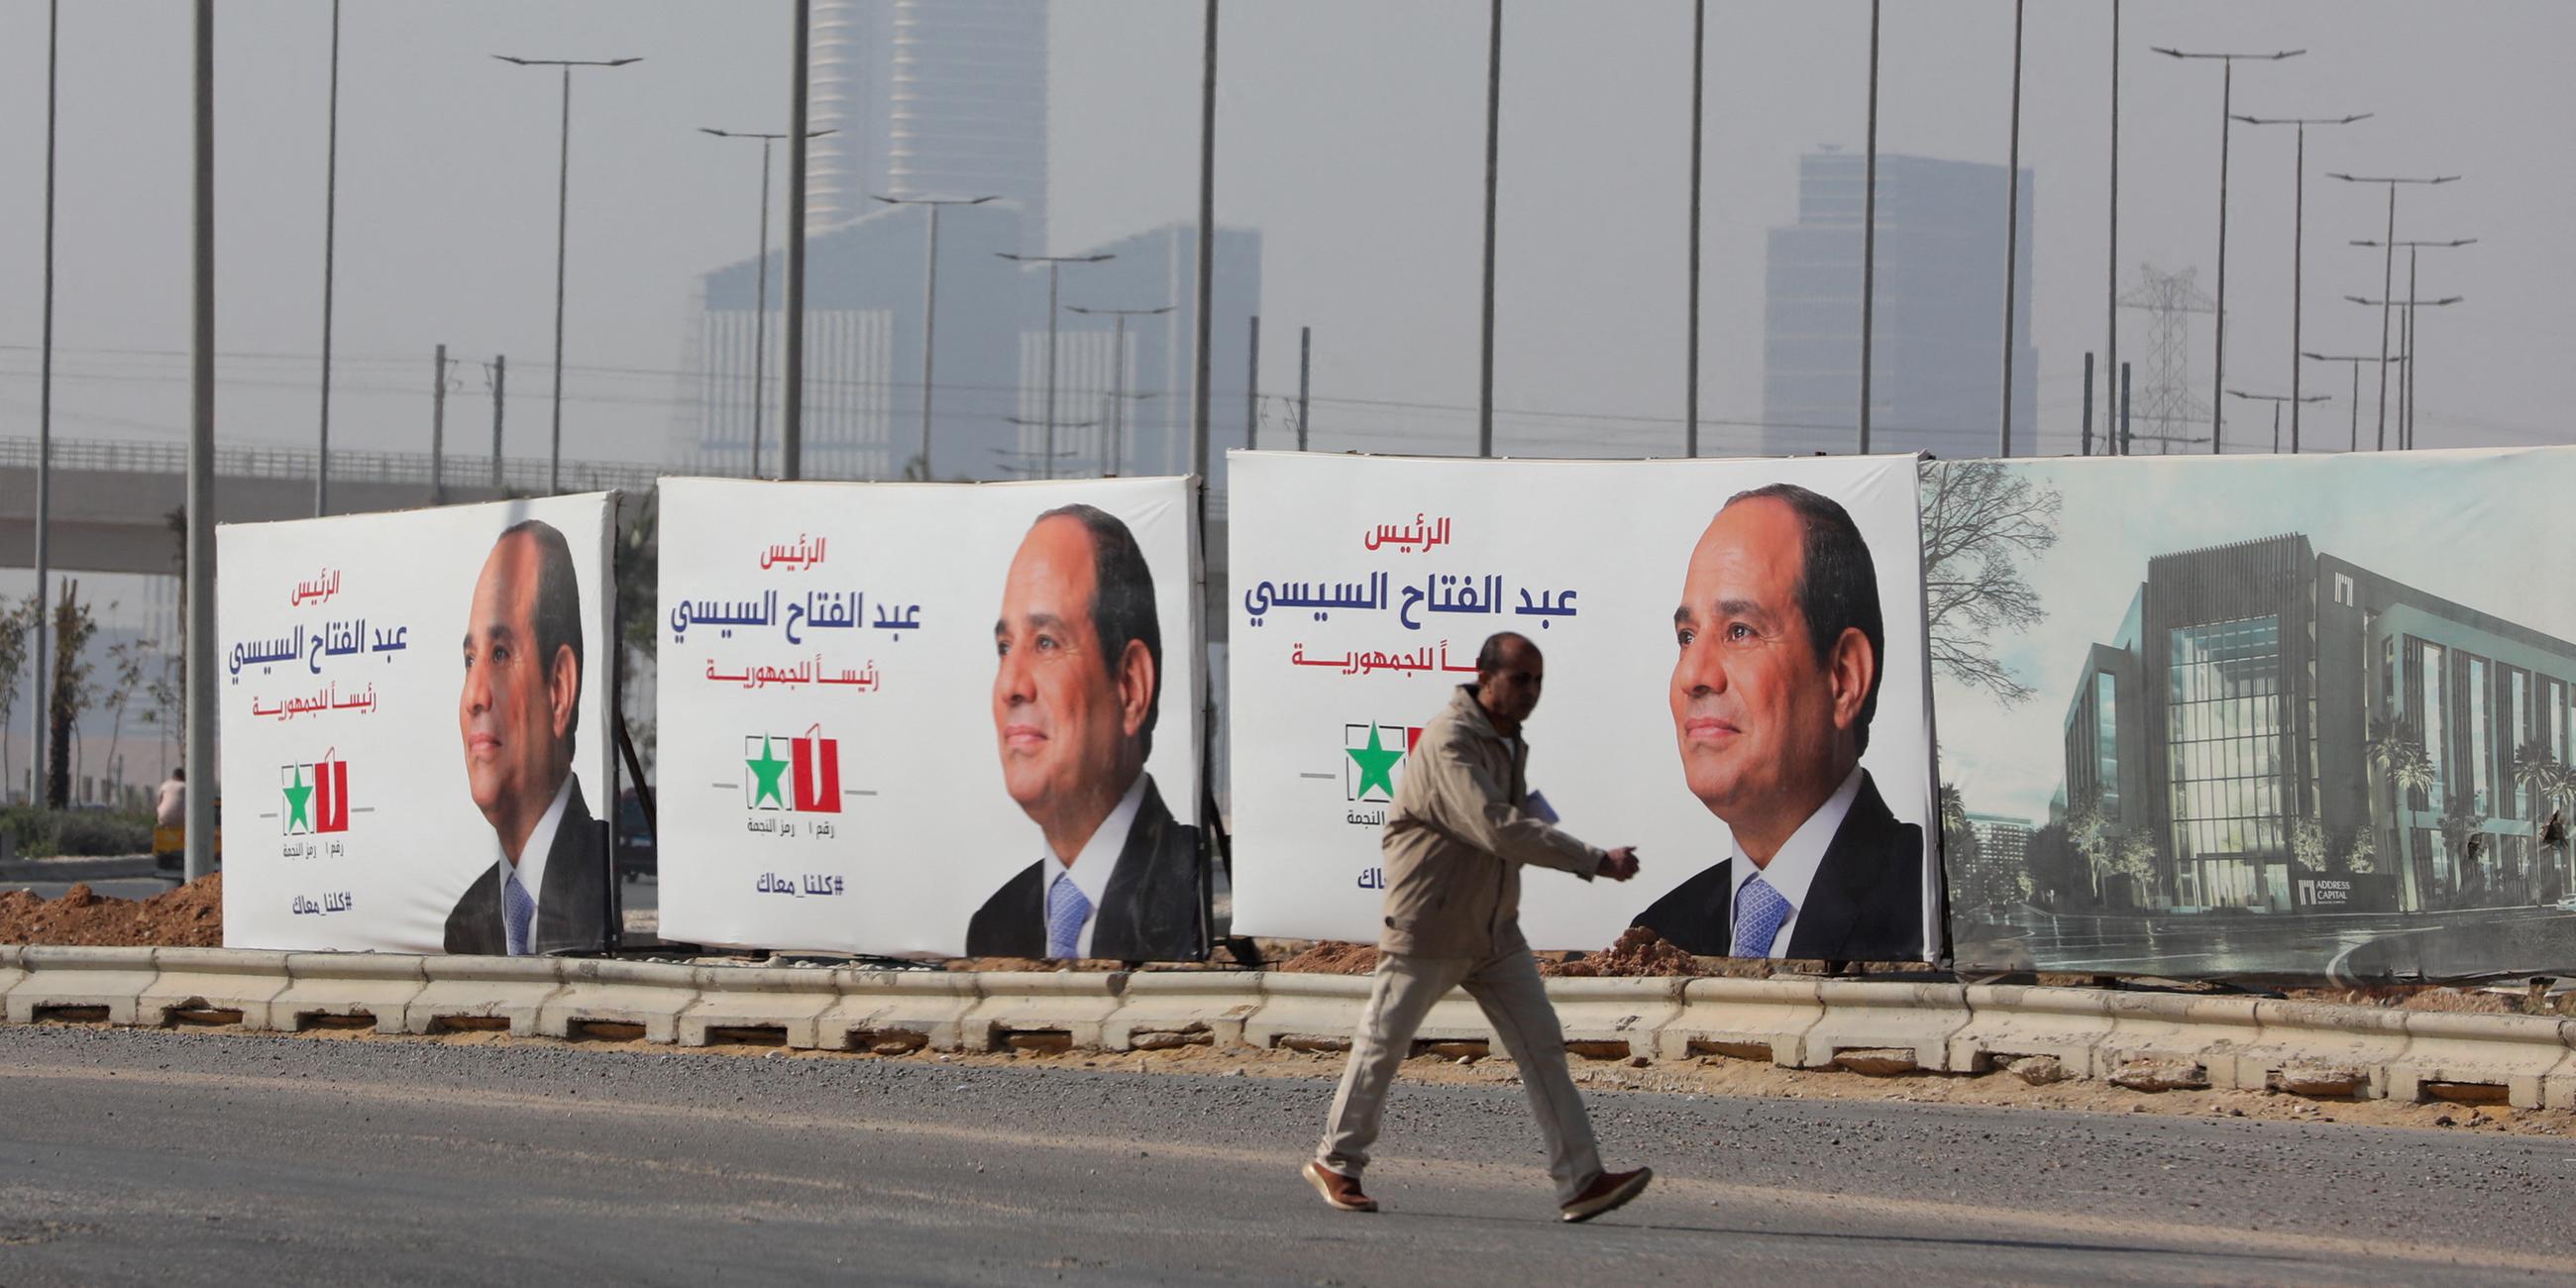 Ägypten, Kairo: Presidentschaftswahl, Wahlplakate des amtierenden Präsidenten Abdel Fattah al-Sisi